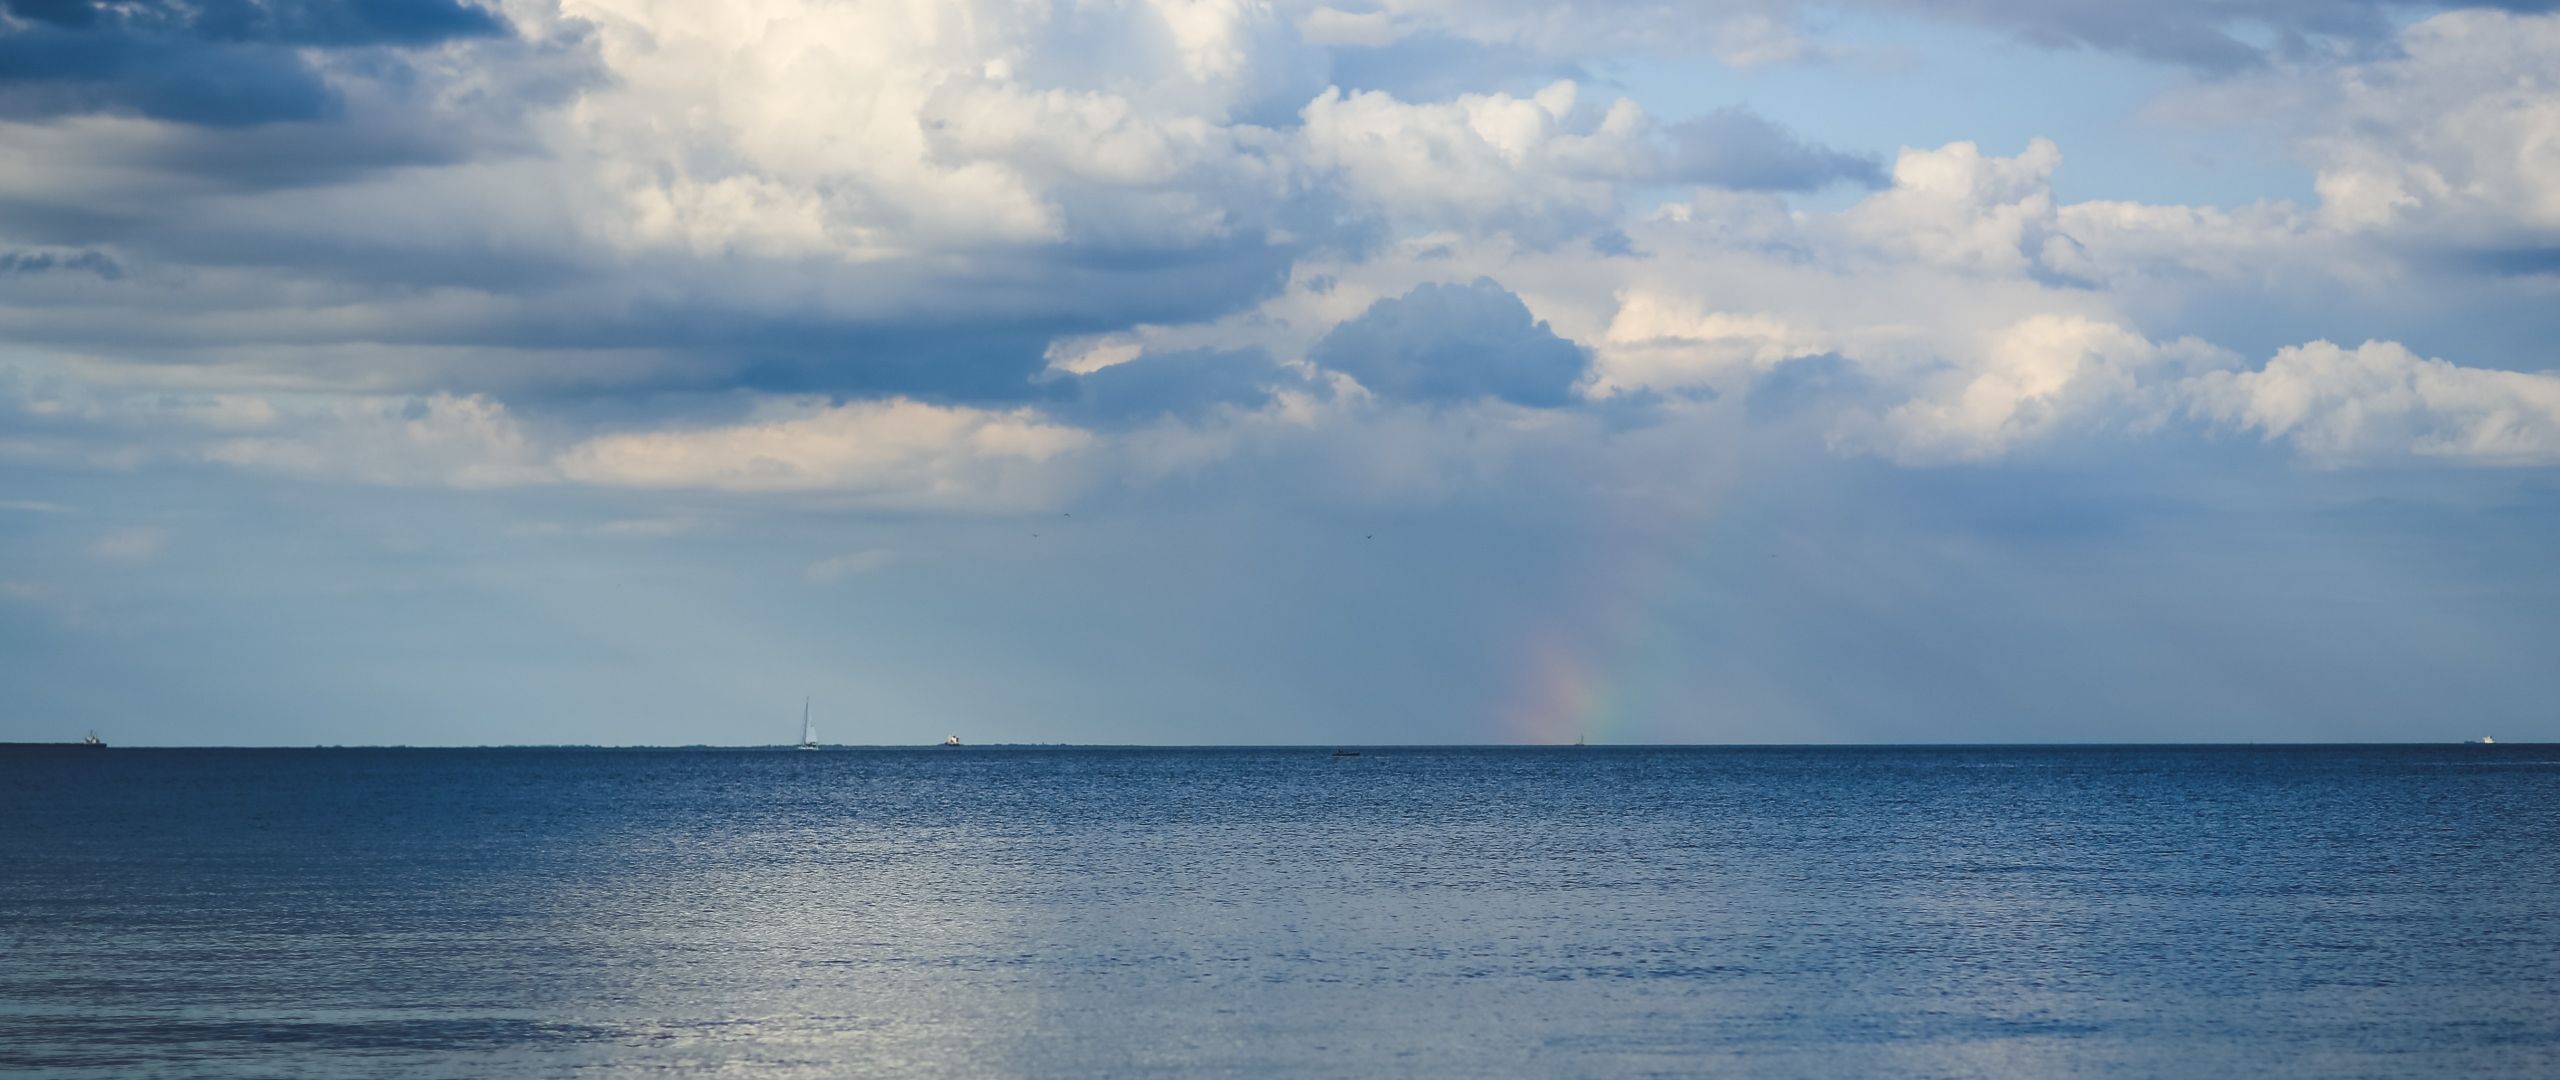 Download Baltic sea, 5k, 4k wallpaper, 8k, horizon, sky, clouds